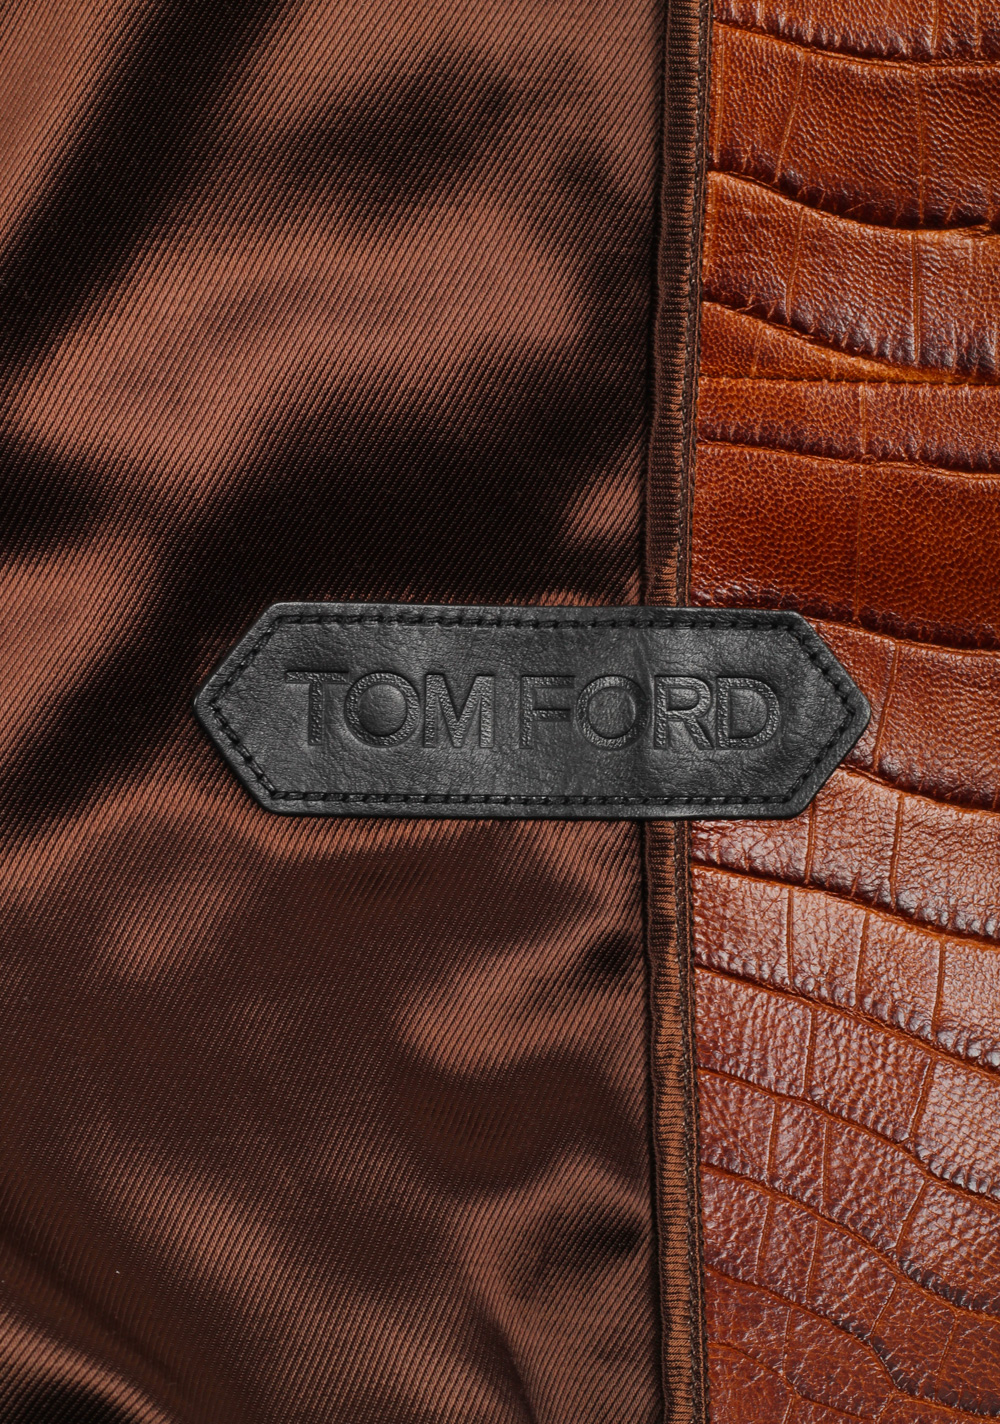 TOM FORD Crocodile Embossed Hooded Jacket Coat